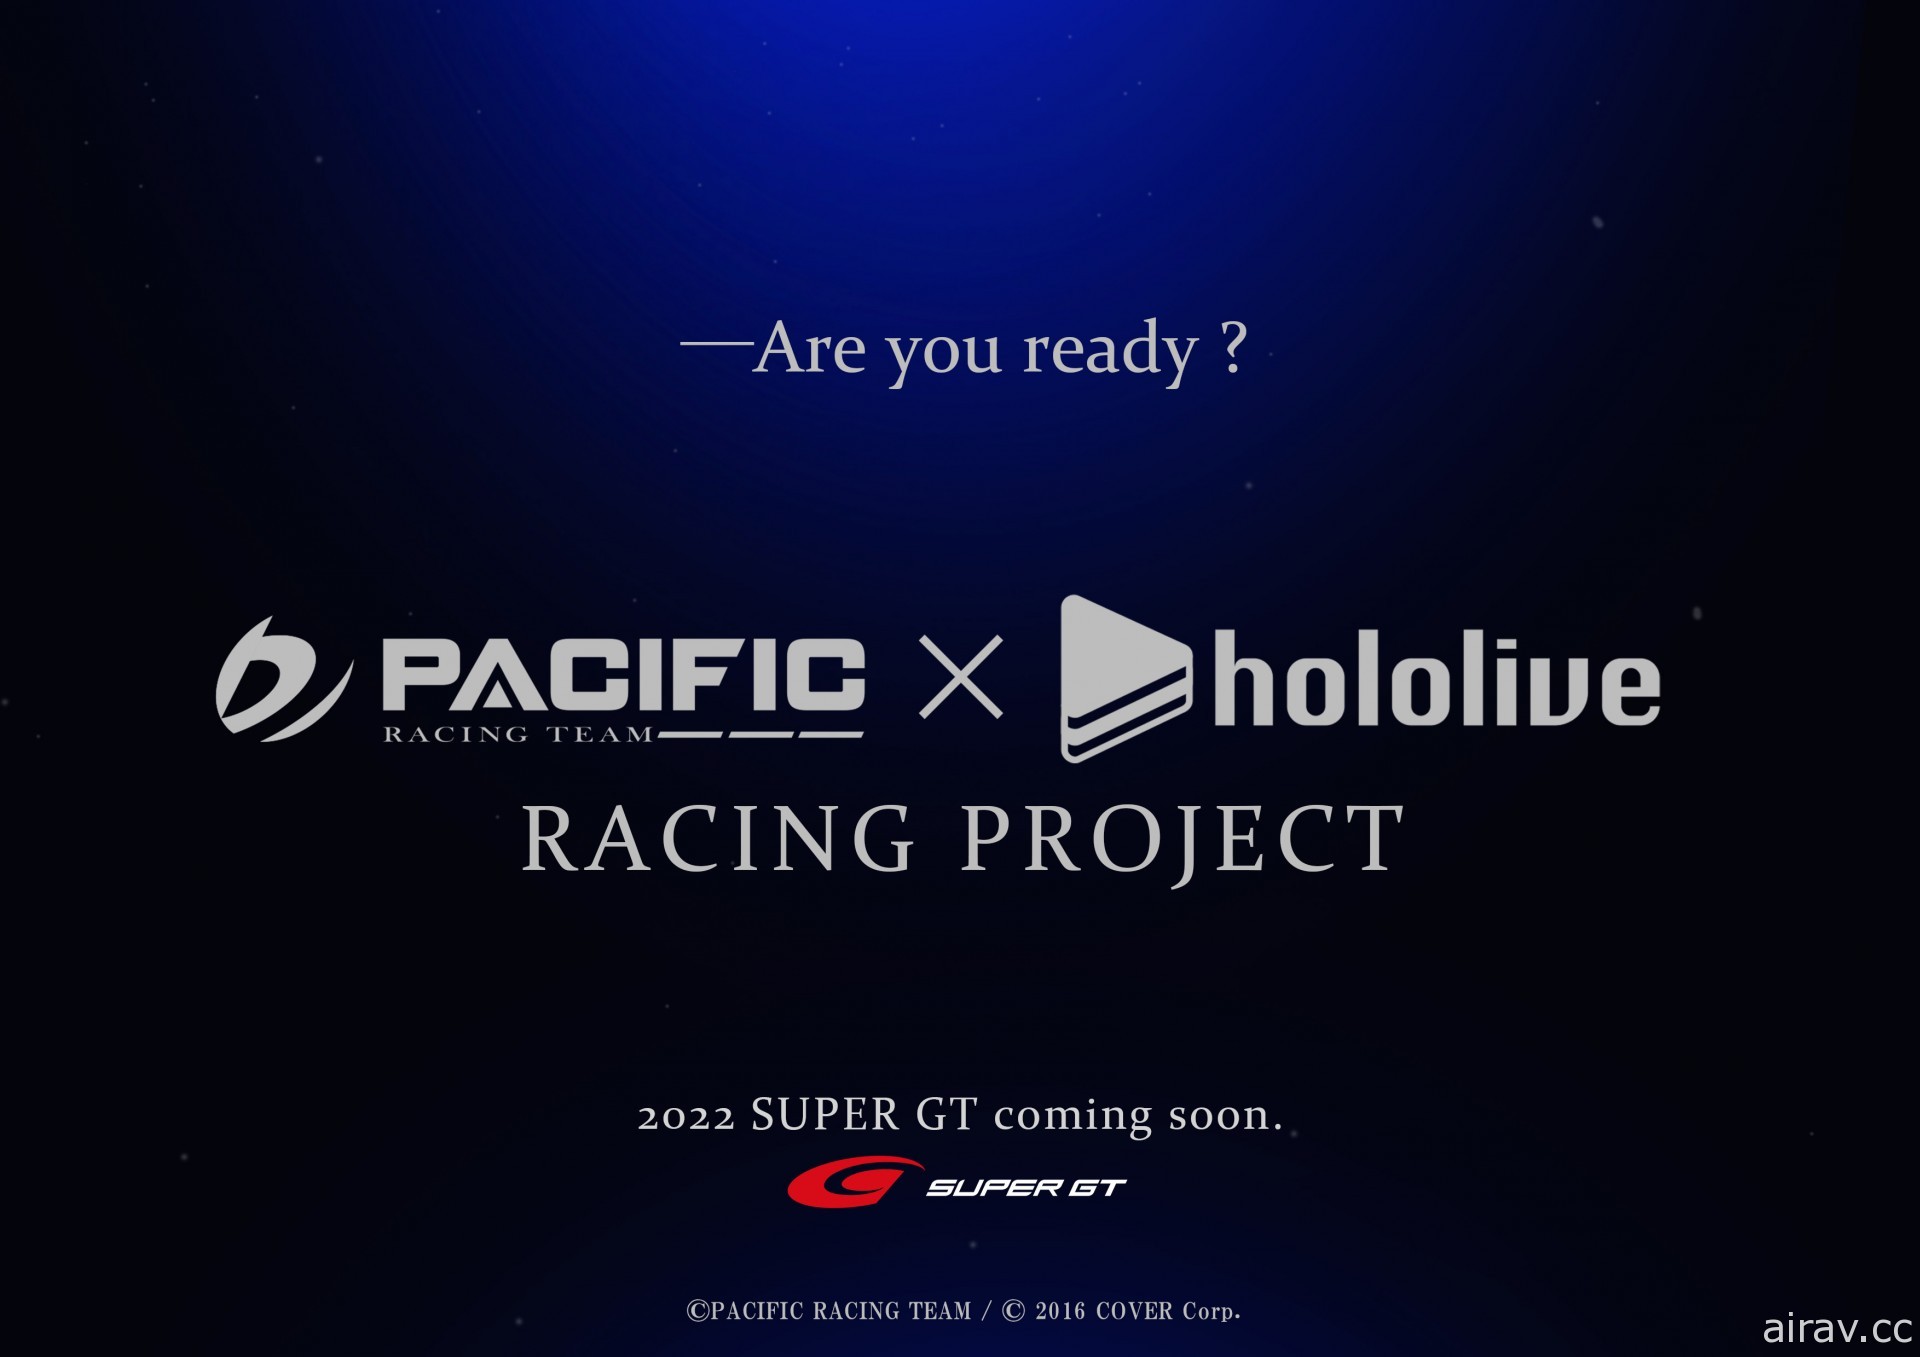 hololive 與 PACIFIC RACING TEAM 合作 宣布參戰「2022 SUPER GT」賽事